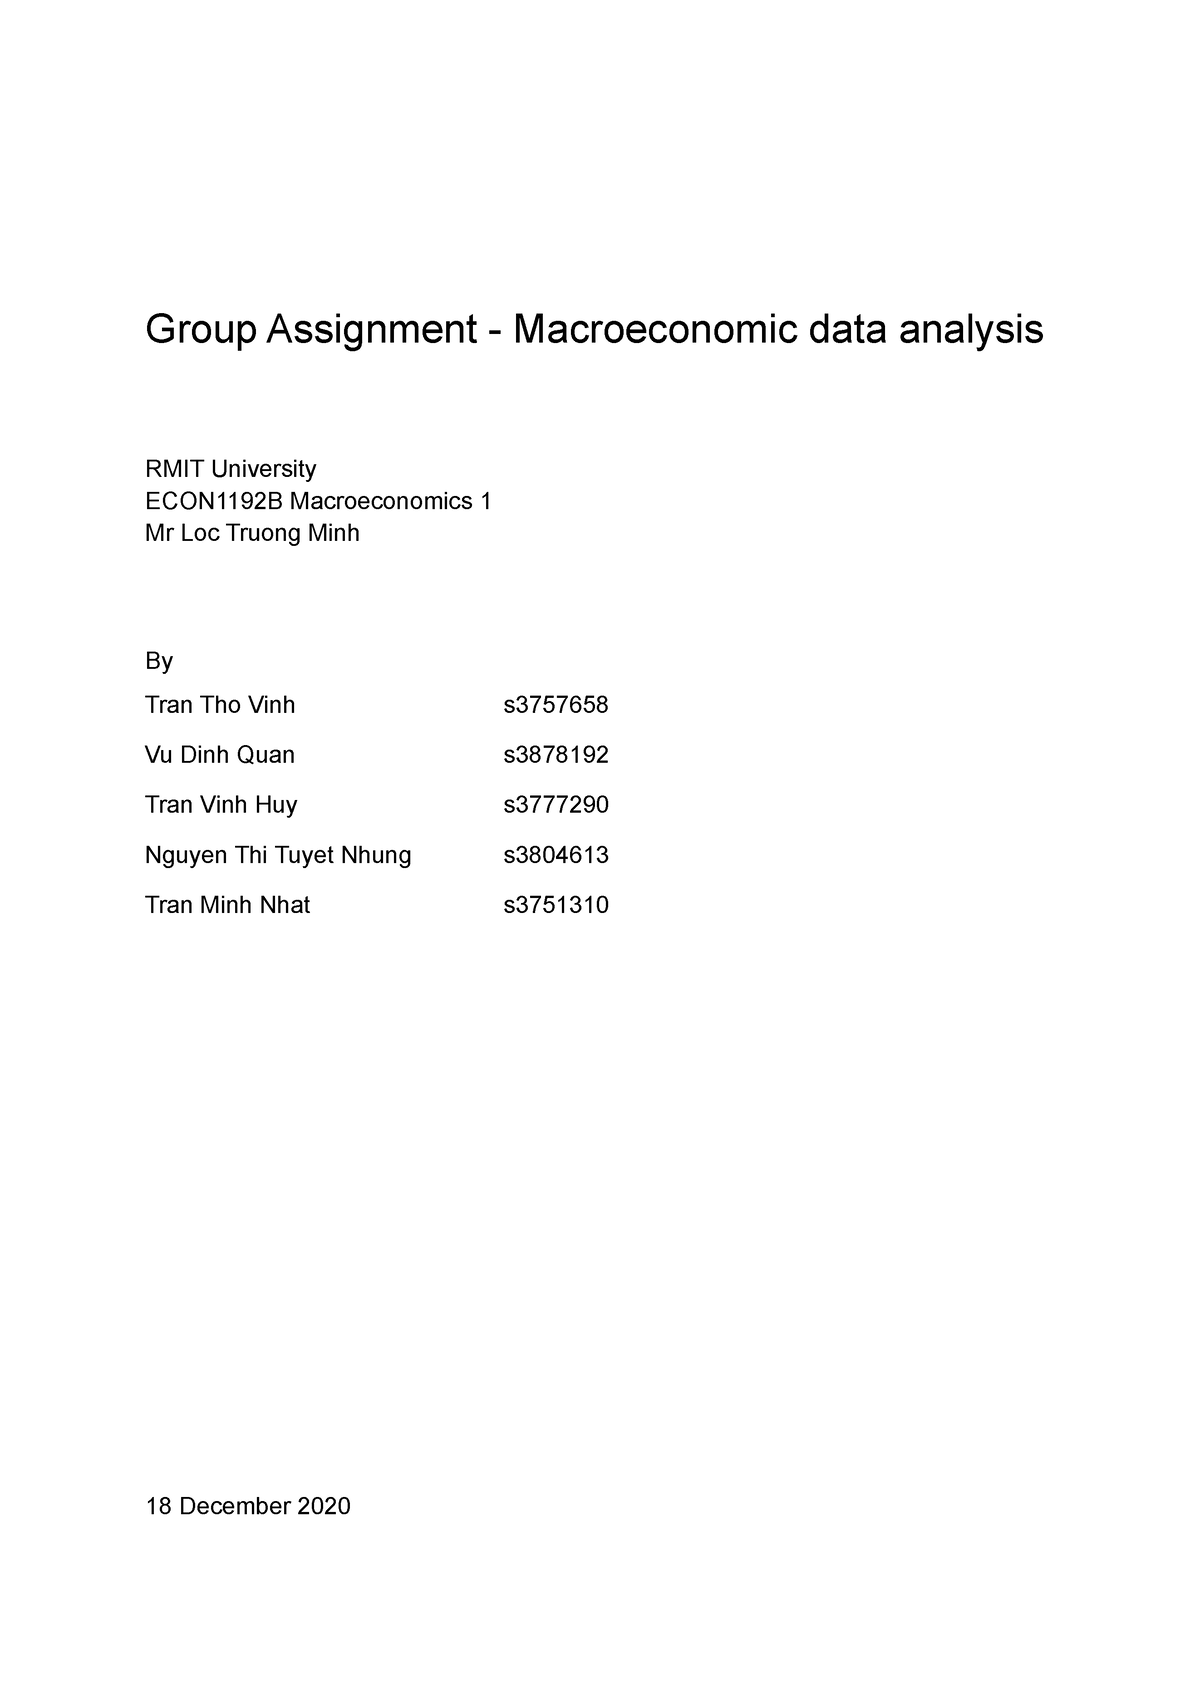 macroeconomics group assignment